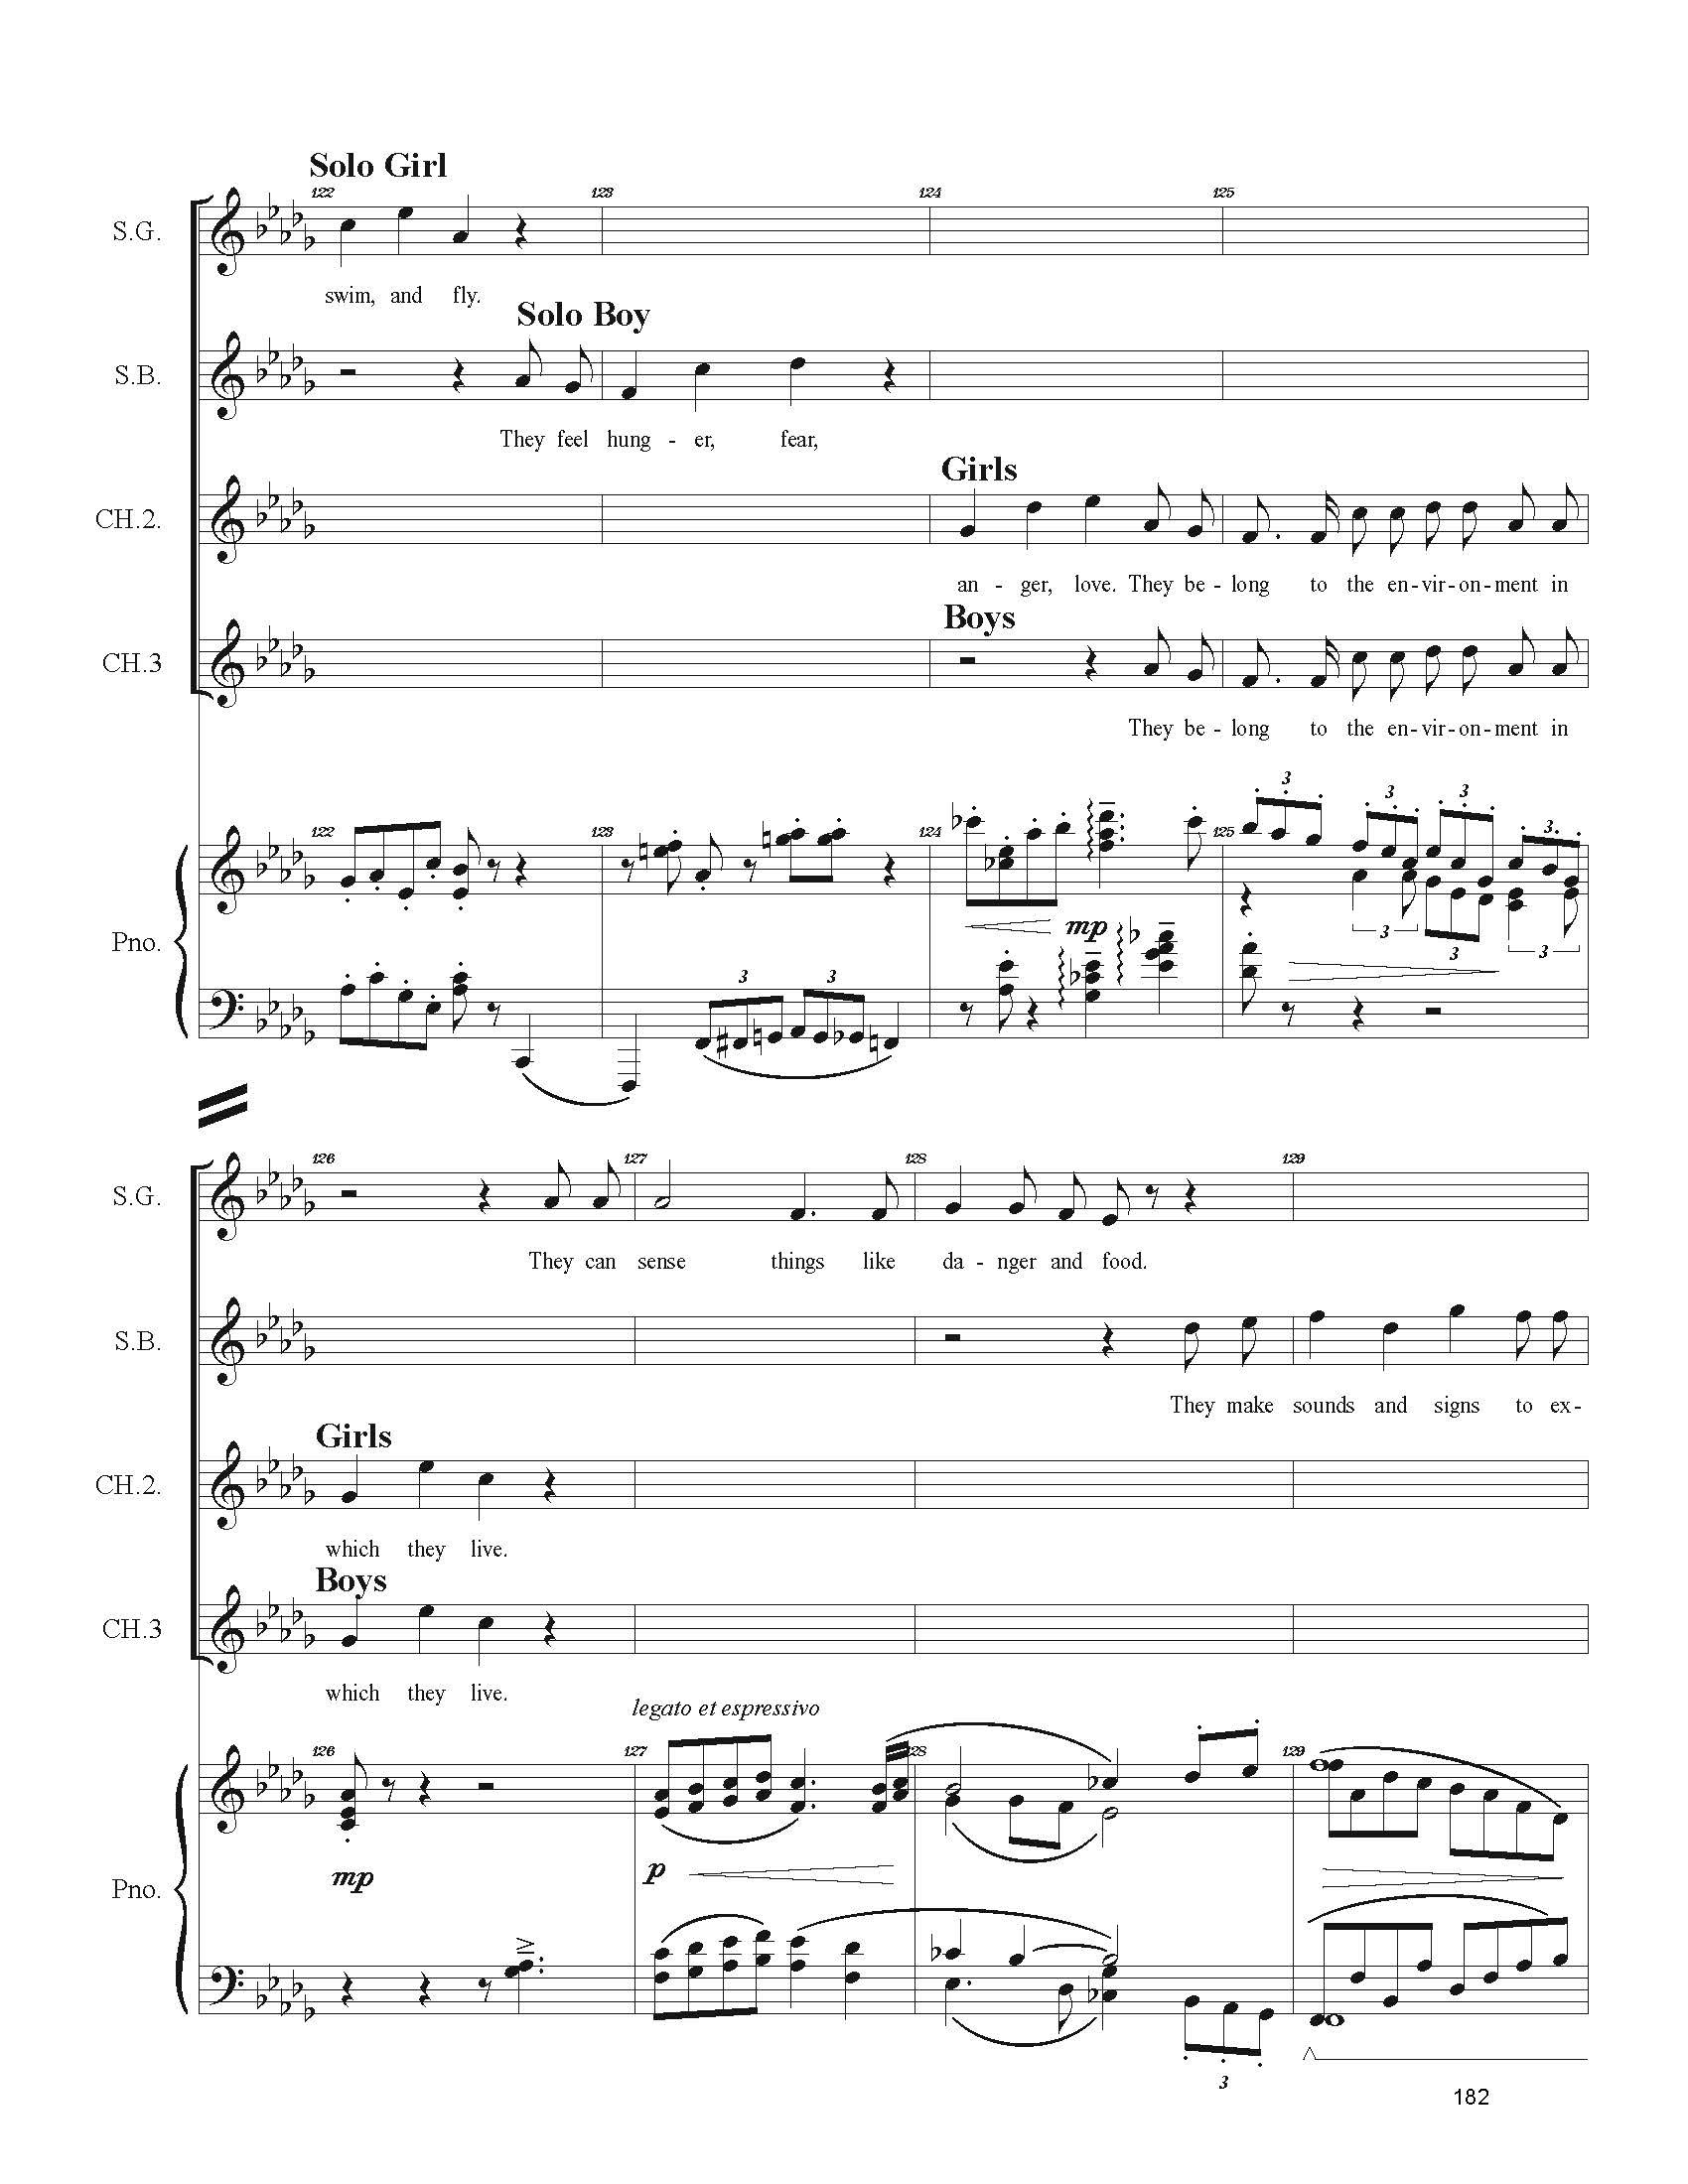 FULL PIANO VOCAL SCORE DRAFT 1 - Score_Page_182.jpg